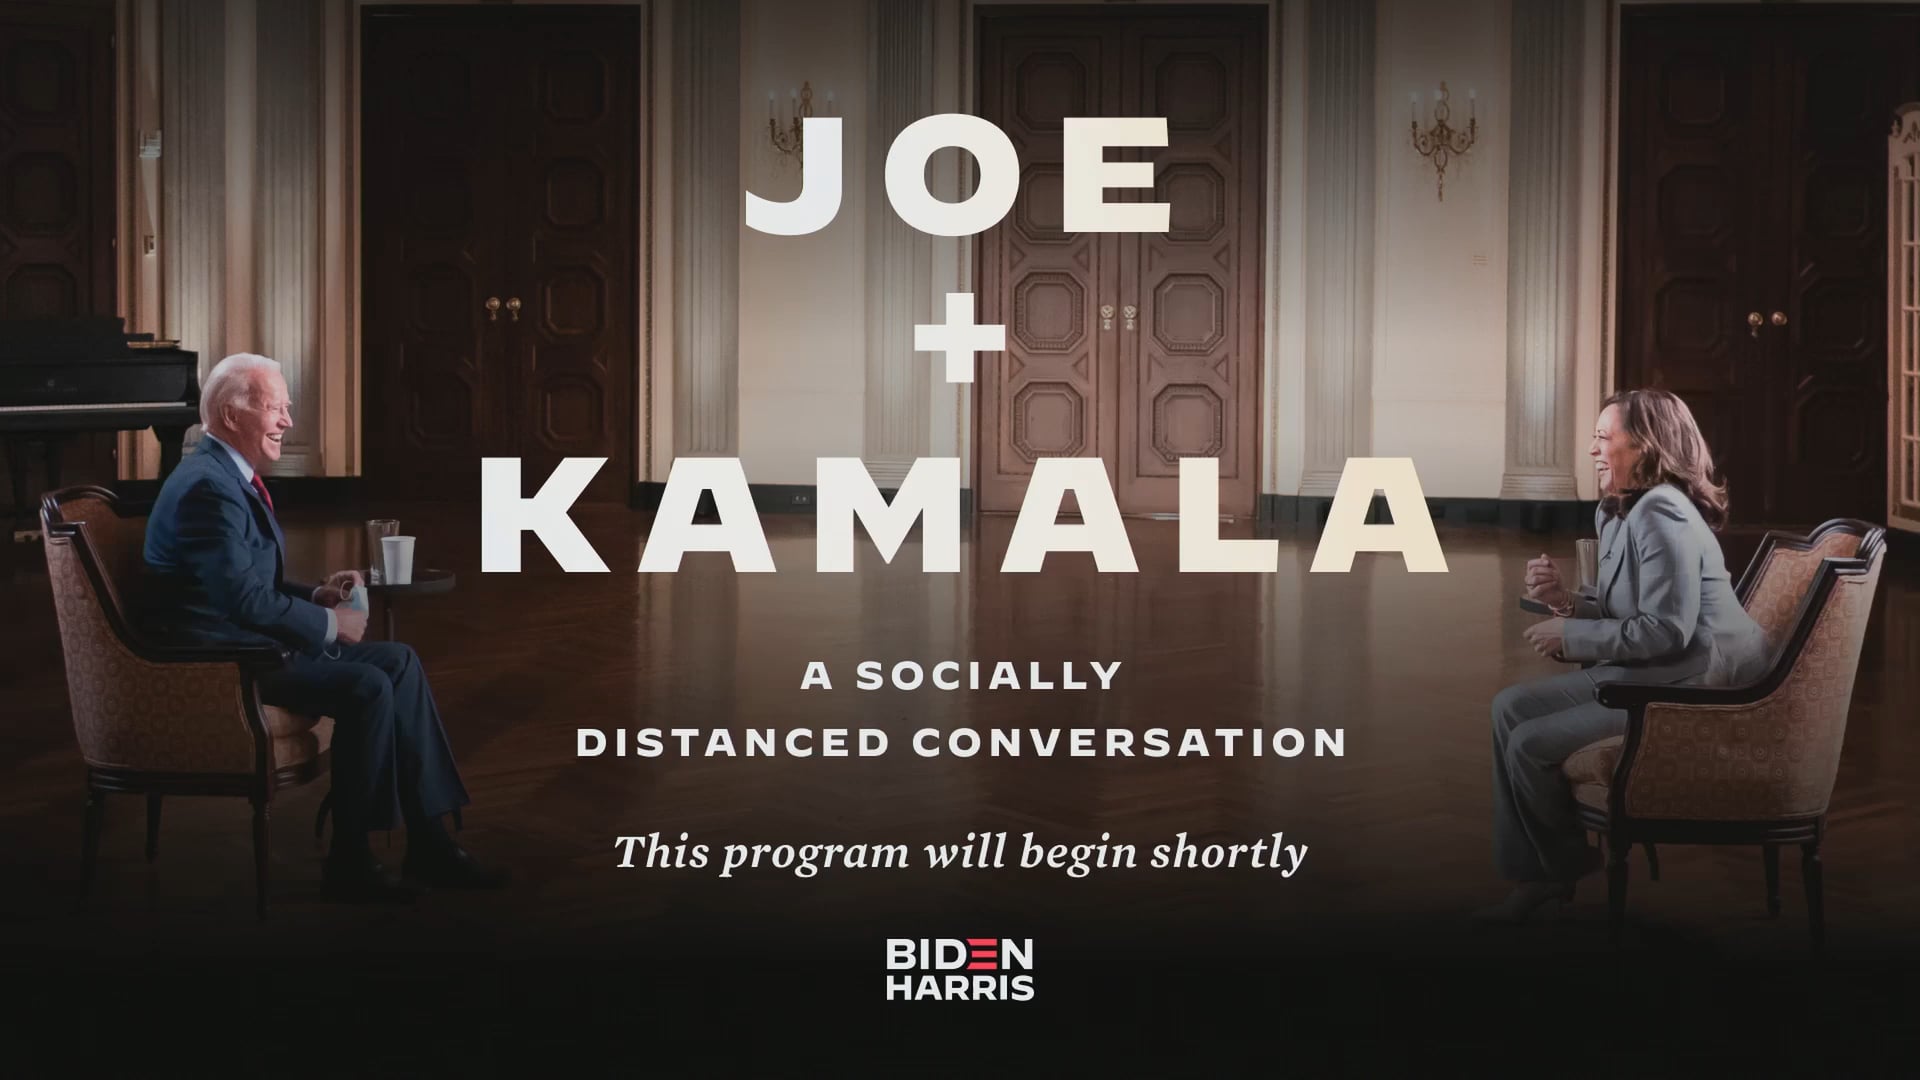 JOE+KAMALA: A Socially Distanced Conversation